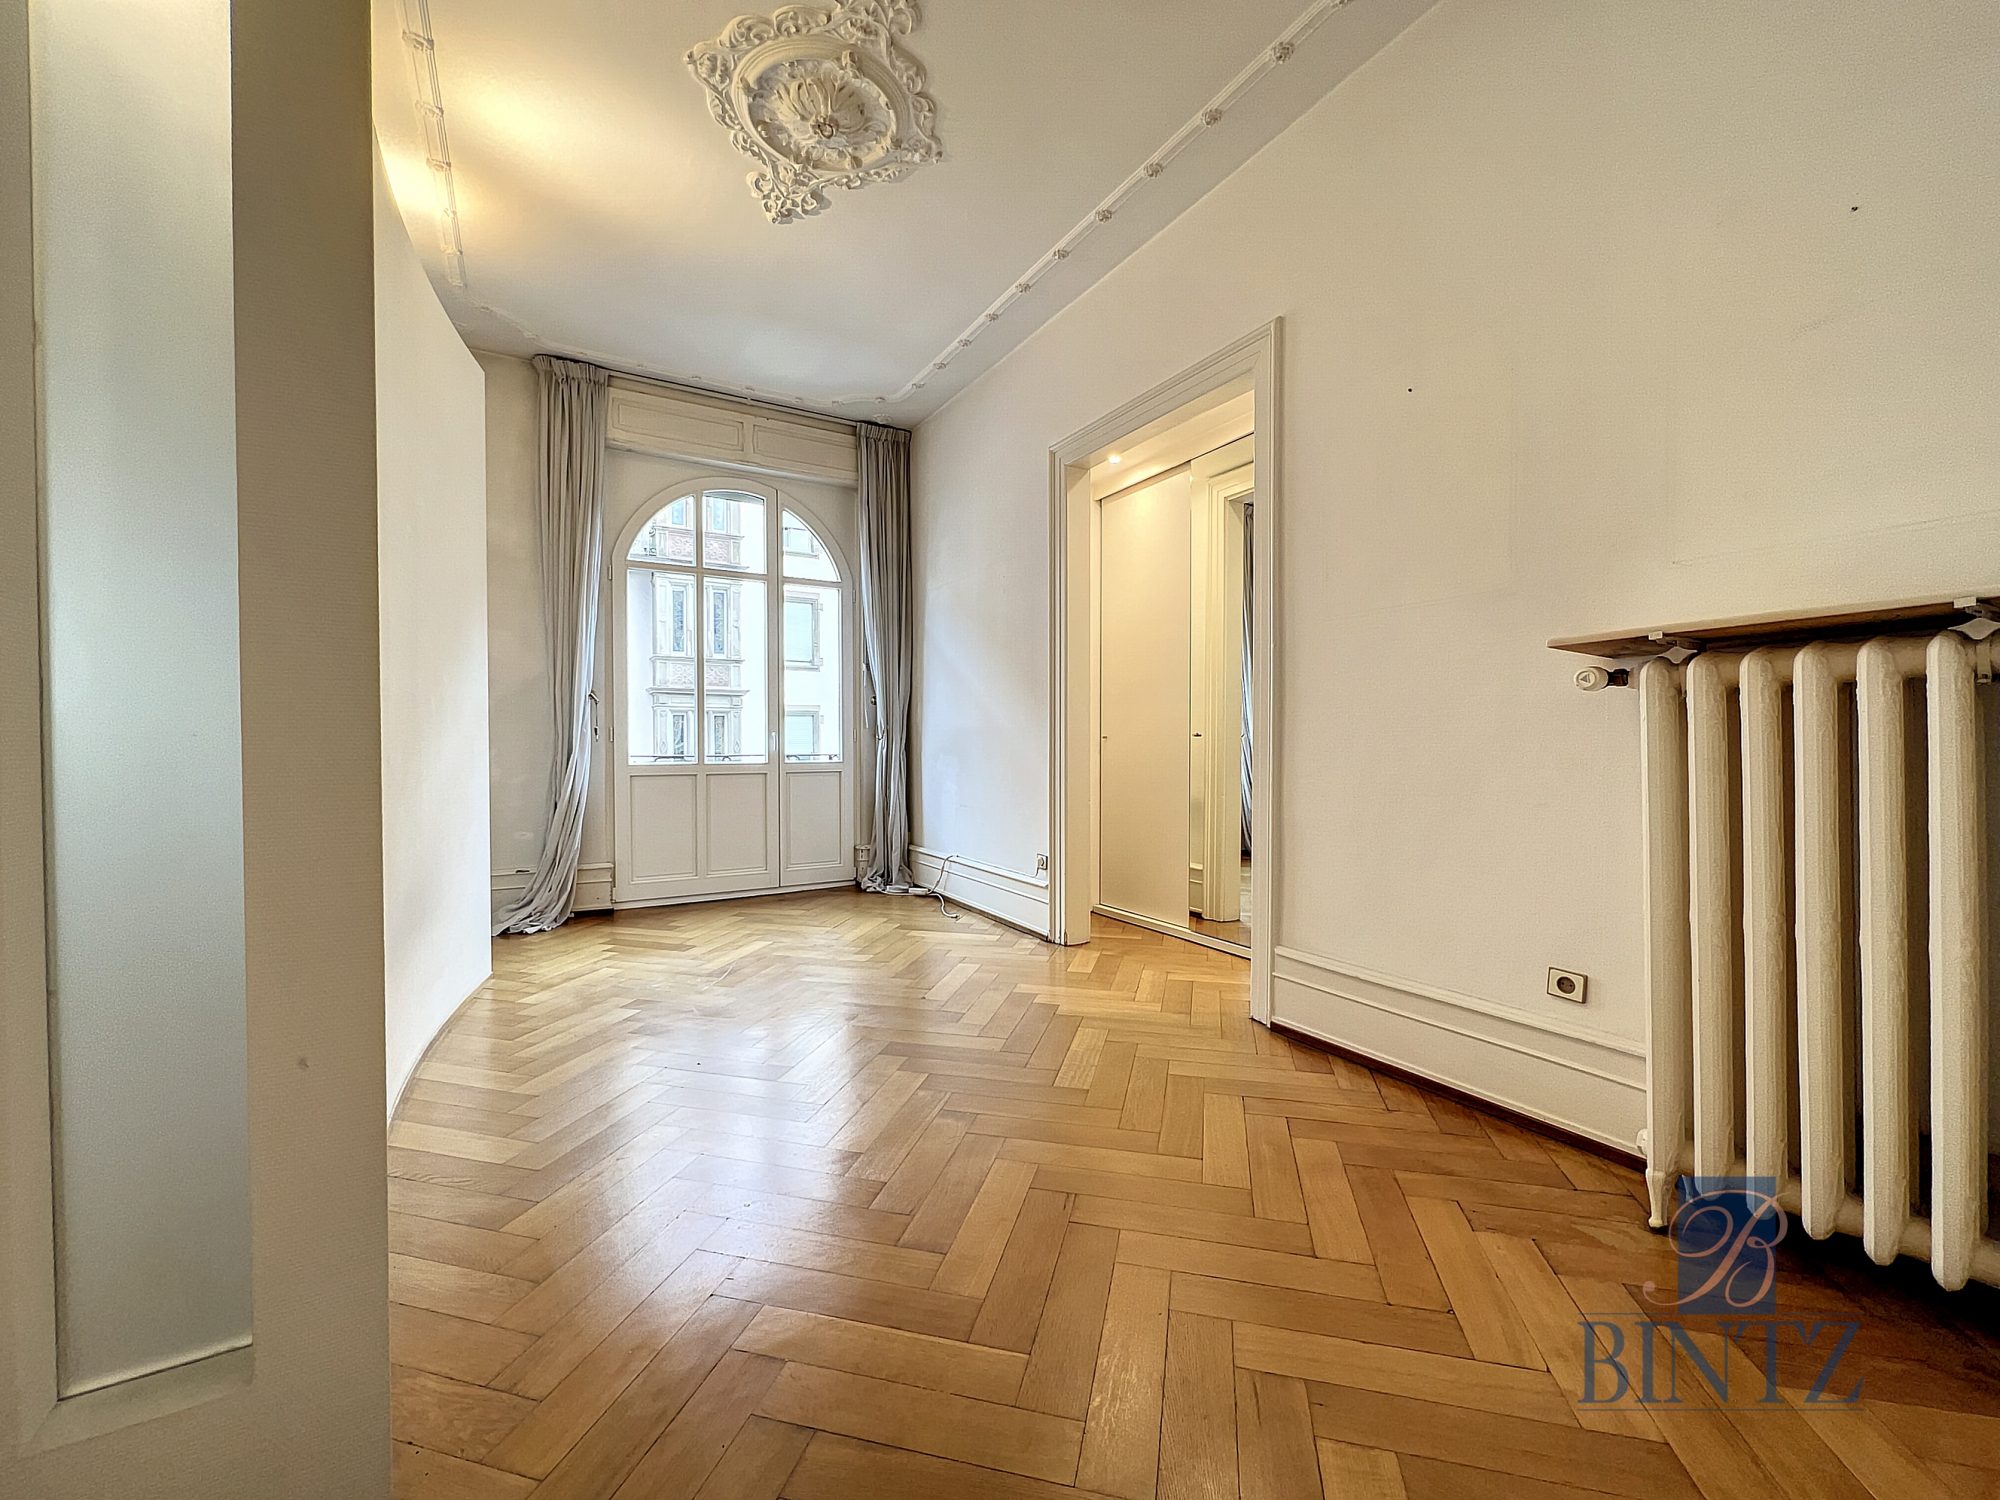 4 pièces avec terrasse - achat appartement Strasbourg - Bintz Immobilier - 8